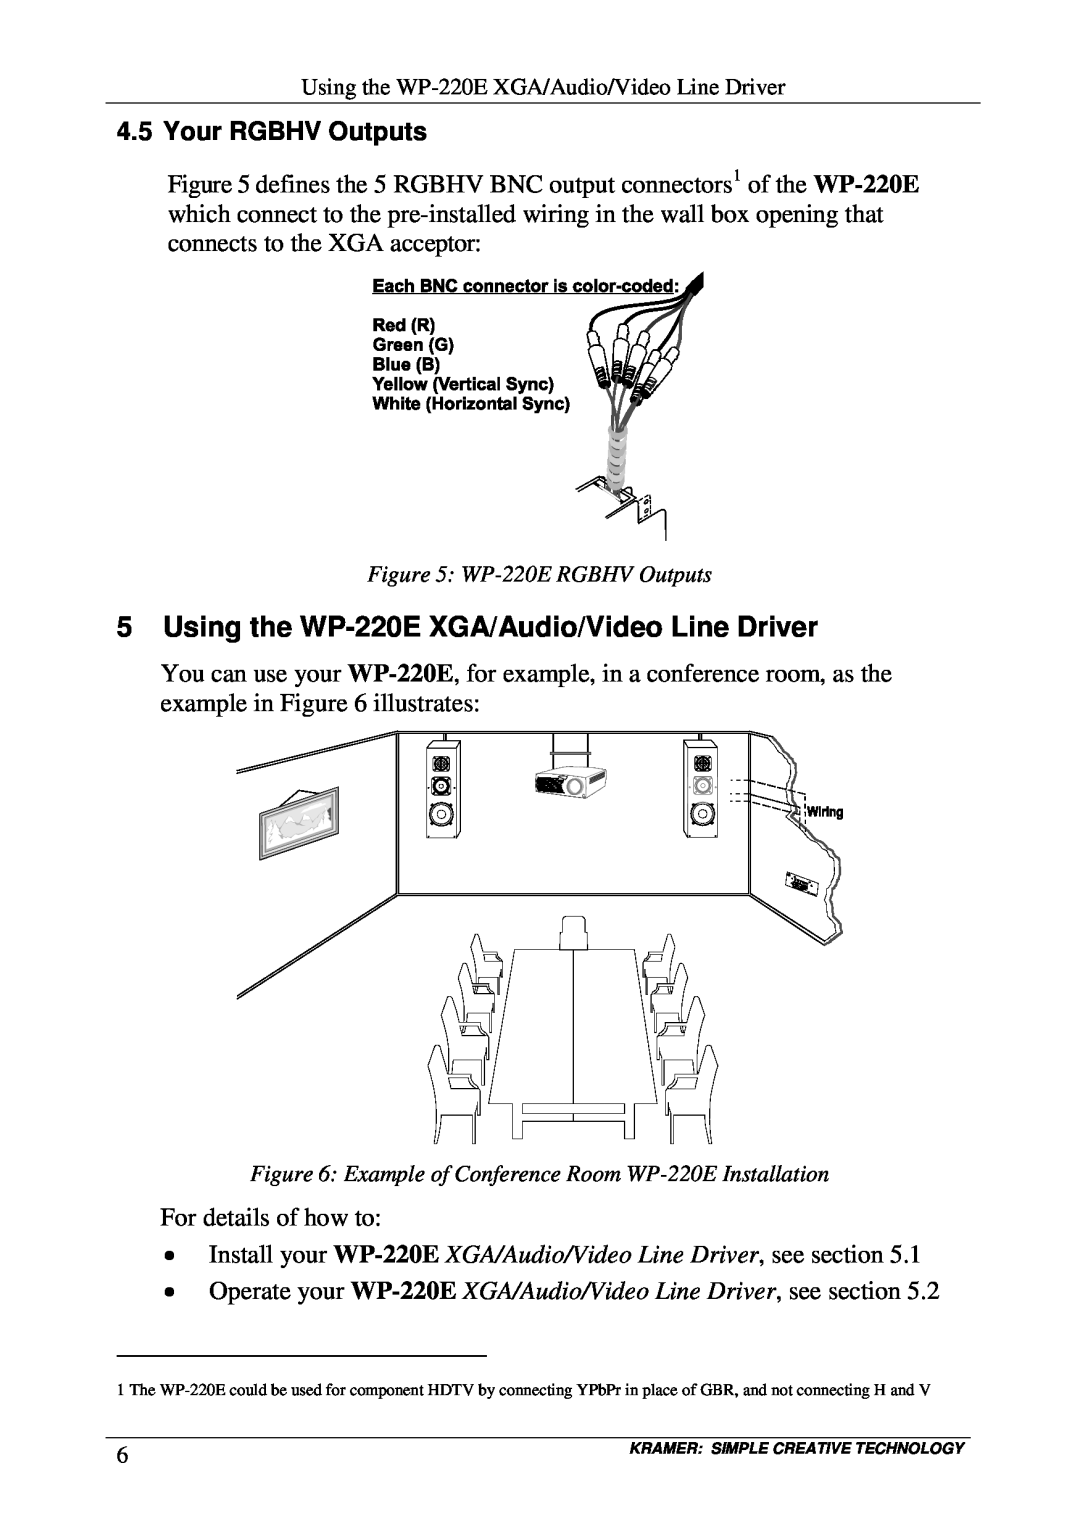 Kramer Electronics user manual 5Using the WP-220EXGA/Audio/Video Line Driver, Your RGBHV Outputs 